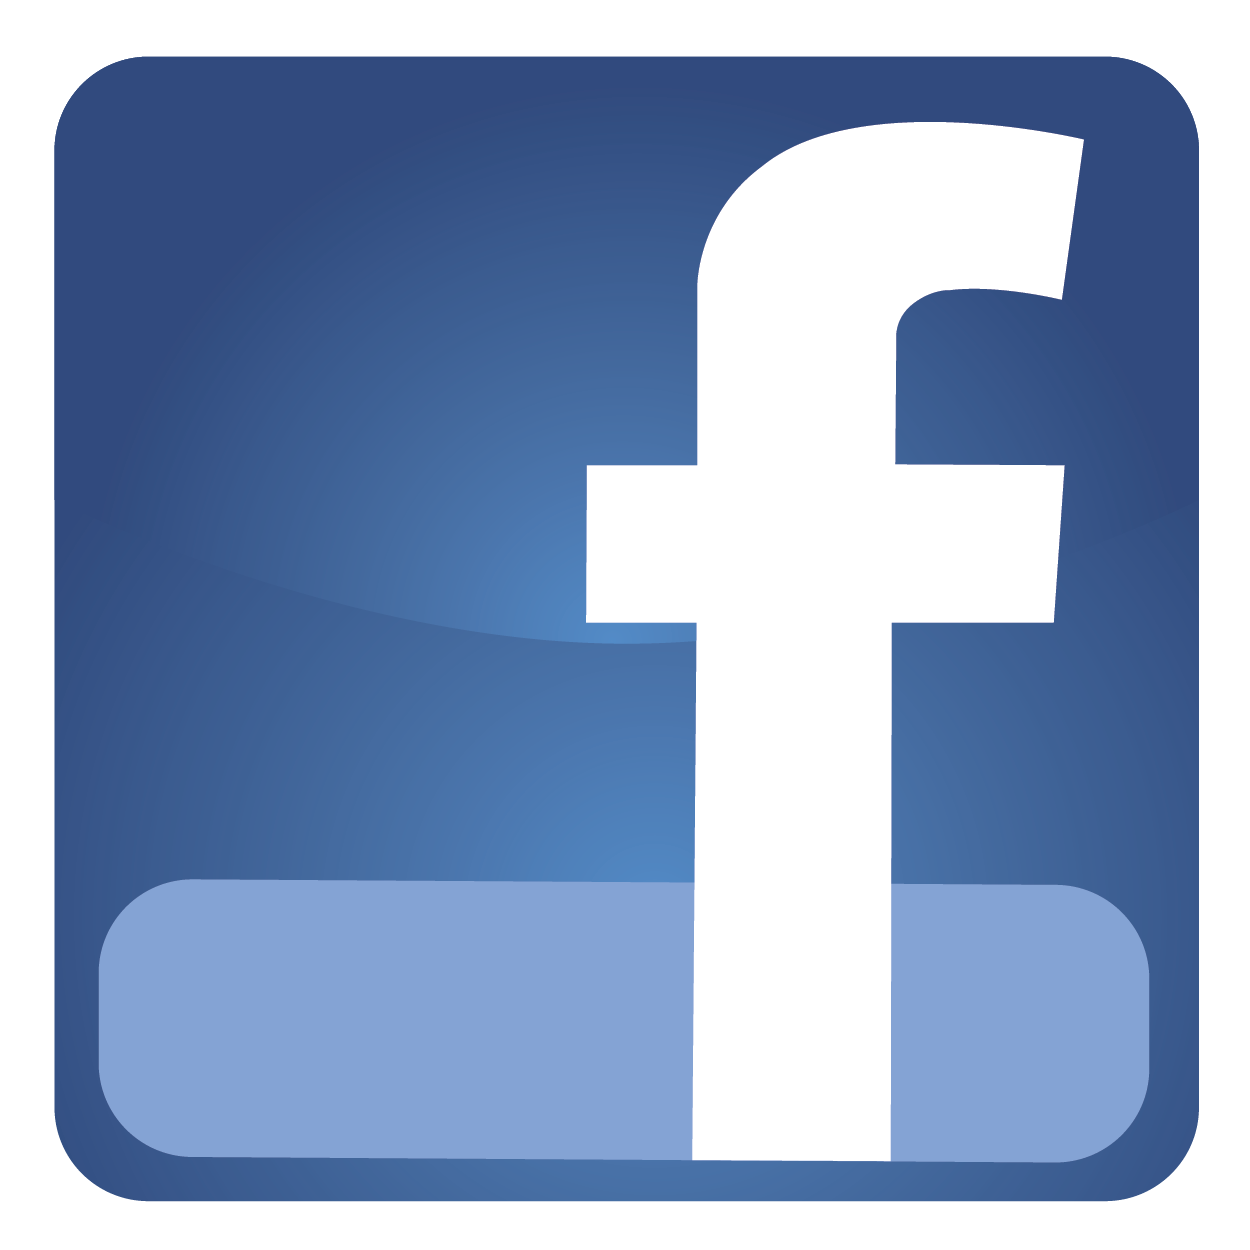 Facebook-